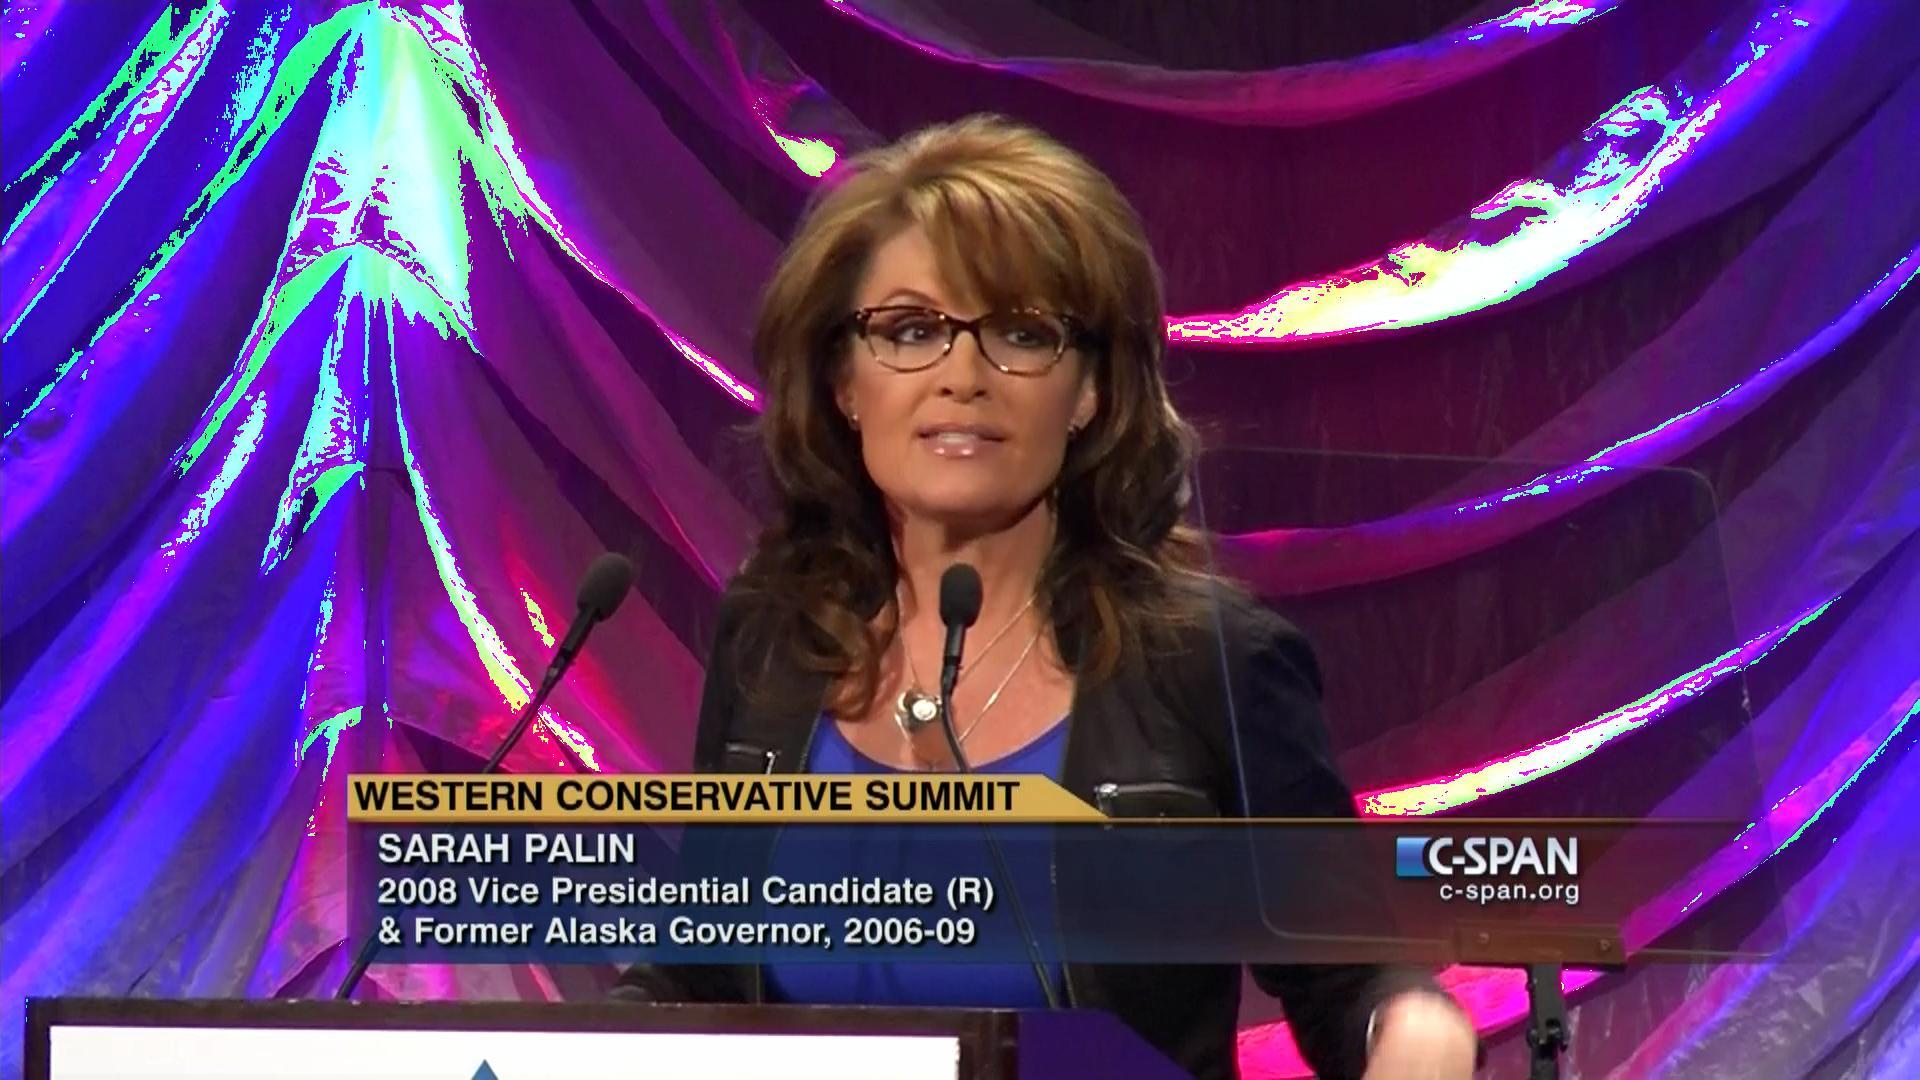 Western Conservative Summit Sarah Palin, Jul 19 2014. Video